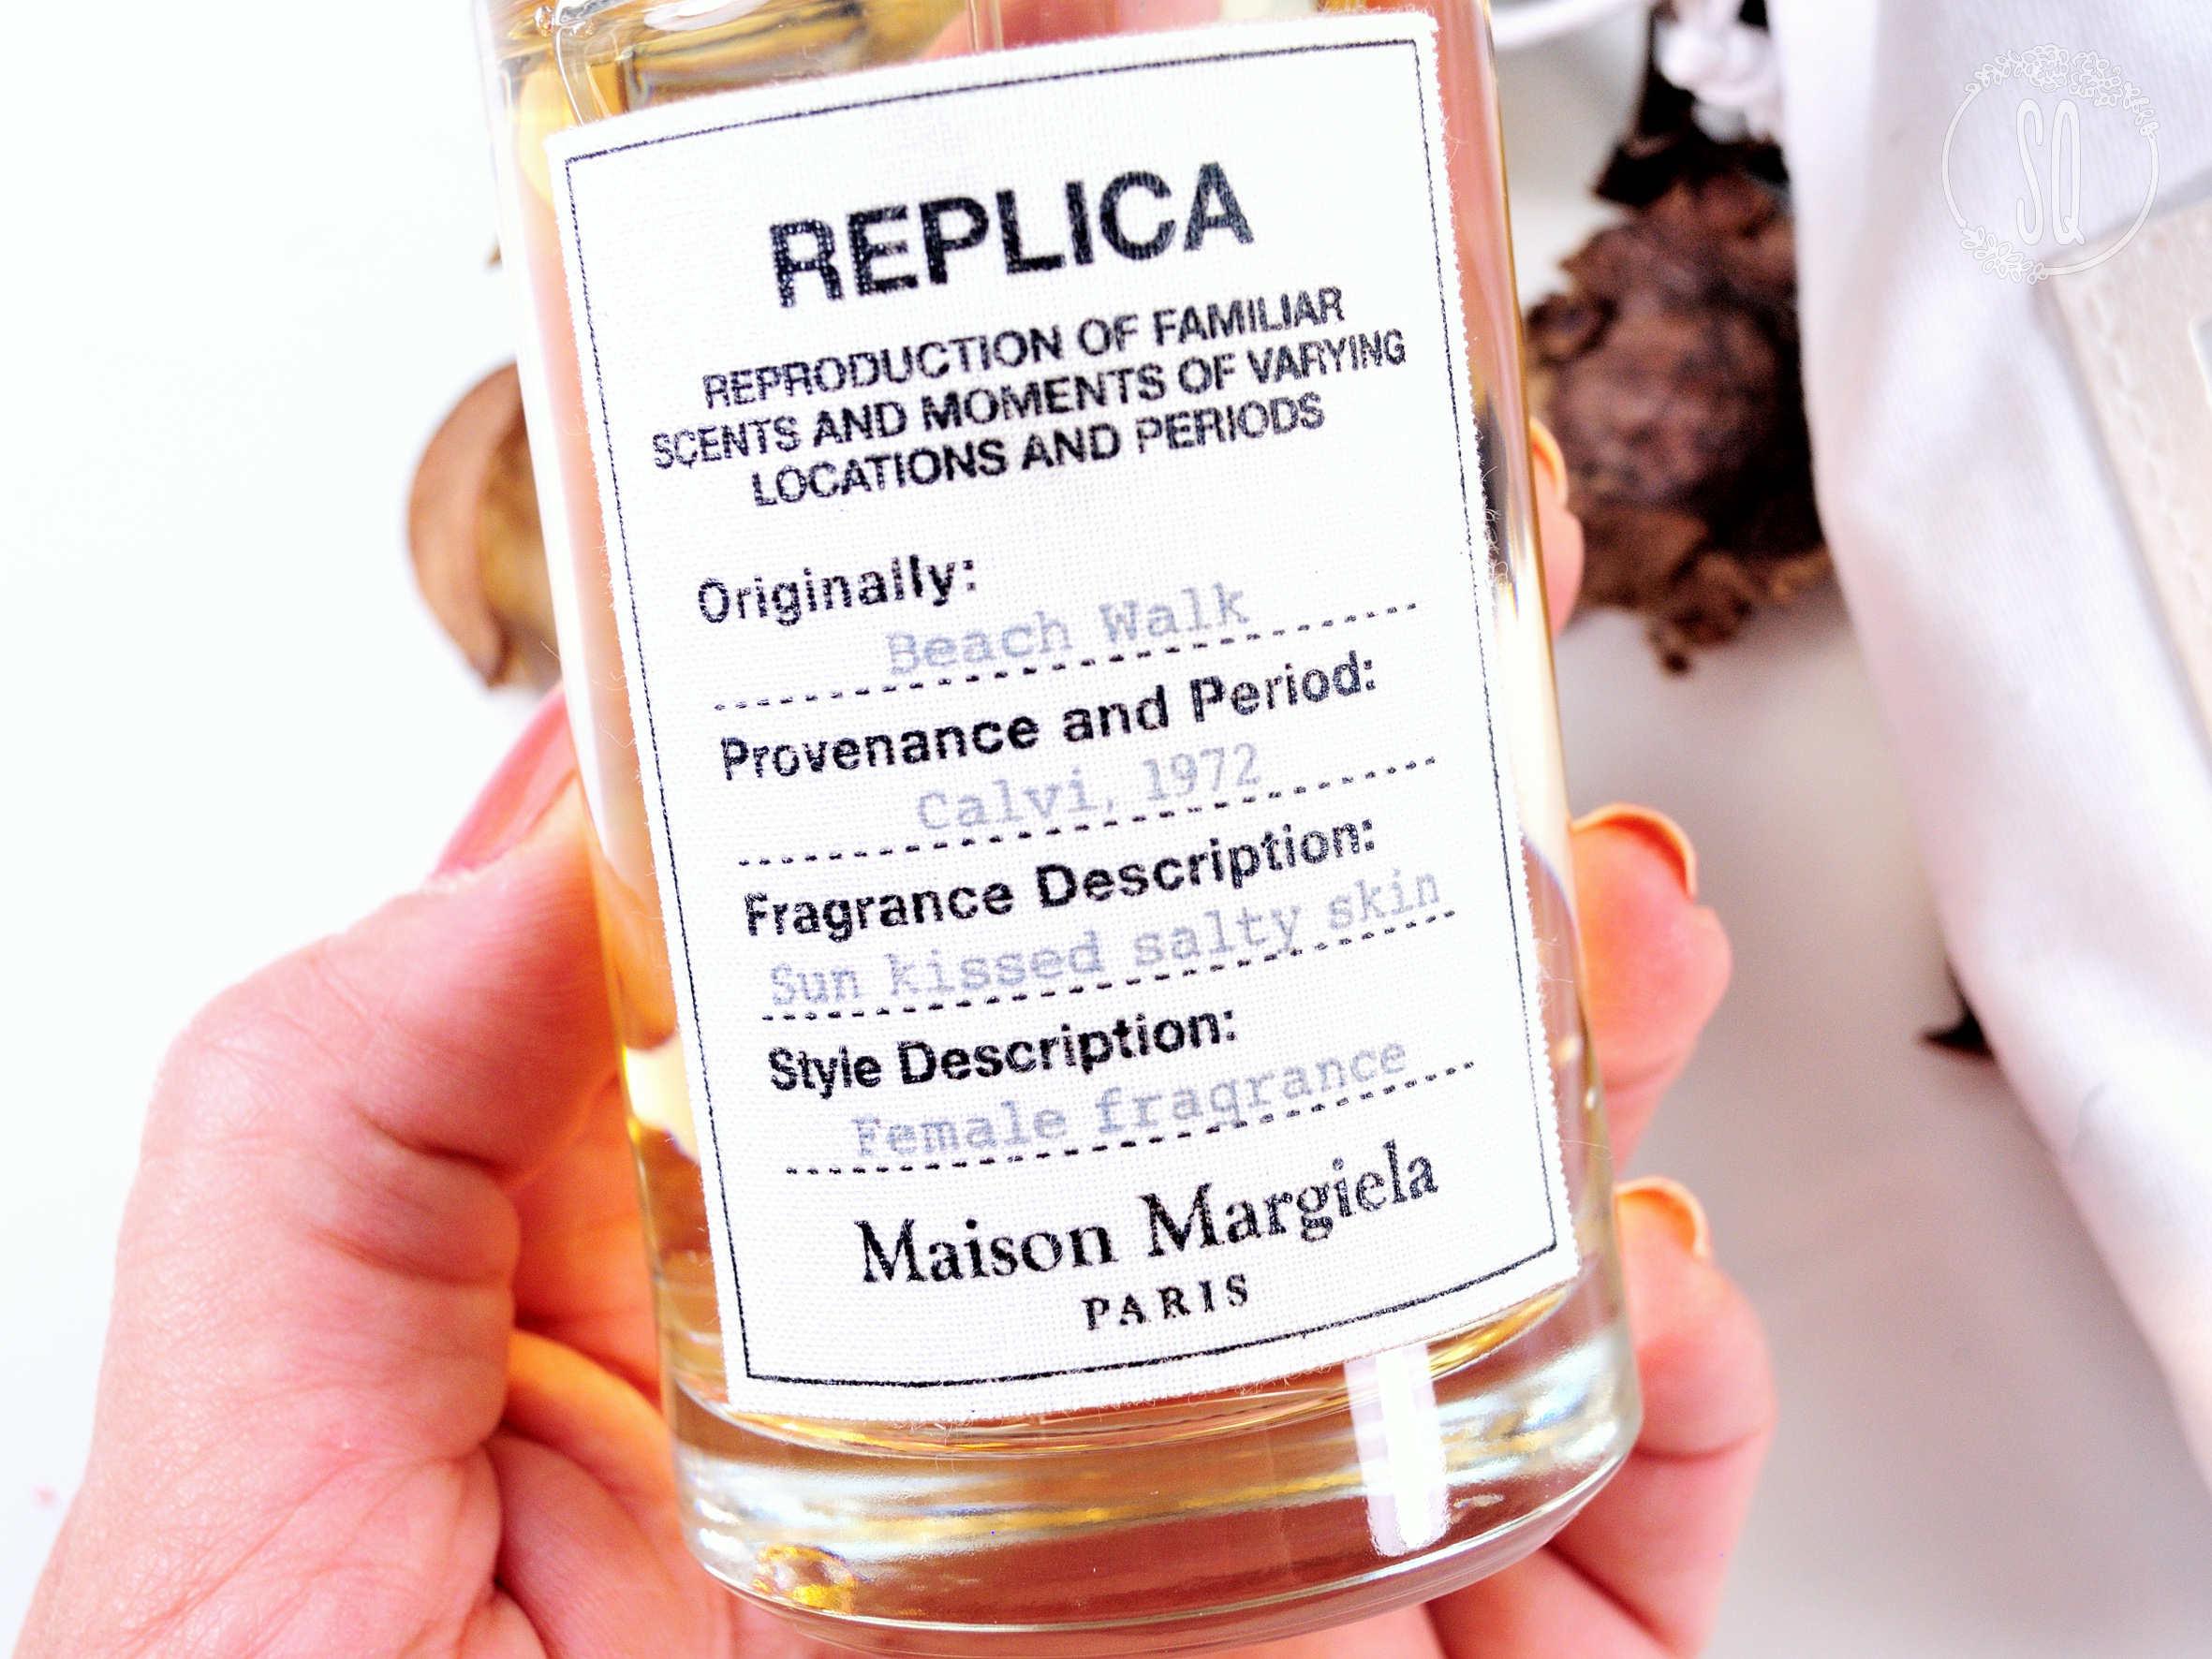 Descubriendo los perfumes de Maison Margeila 